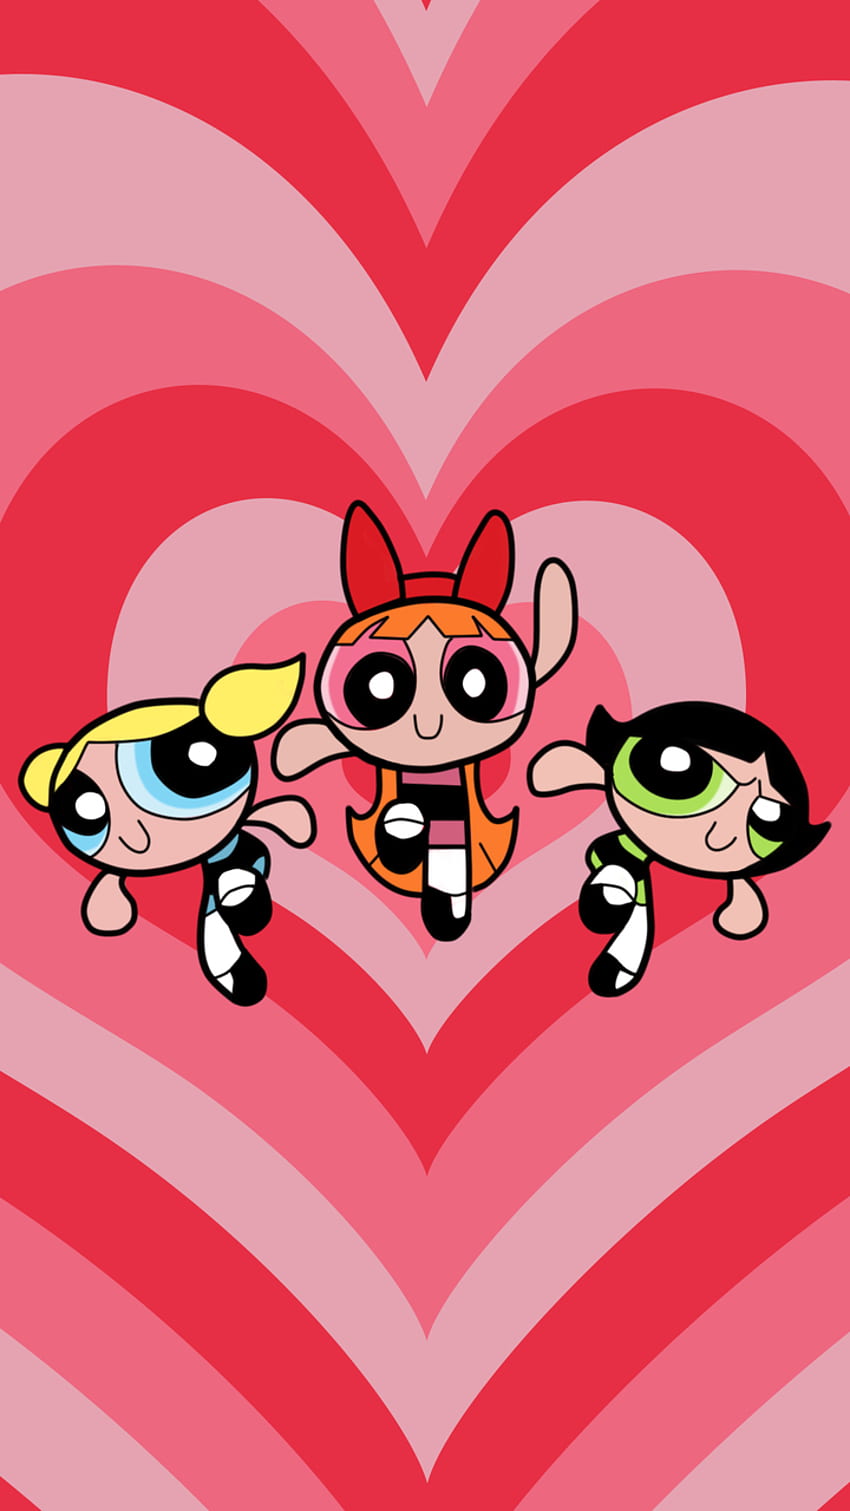 The powerpuff girls are on a heart shaped background - The Powerpuff Girls